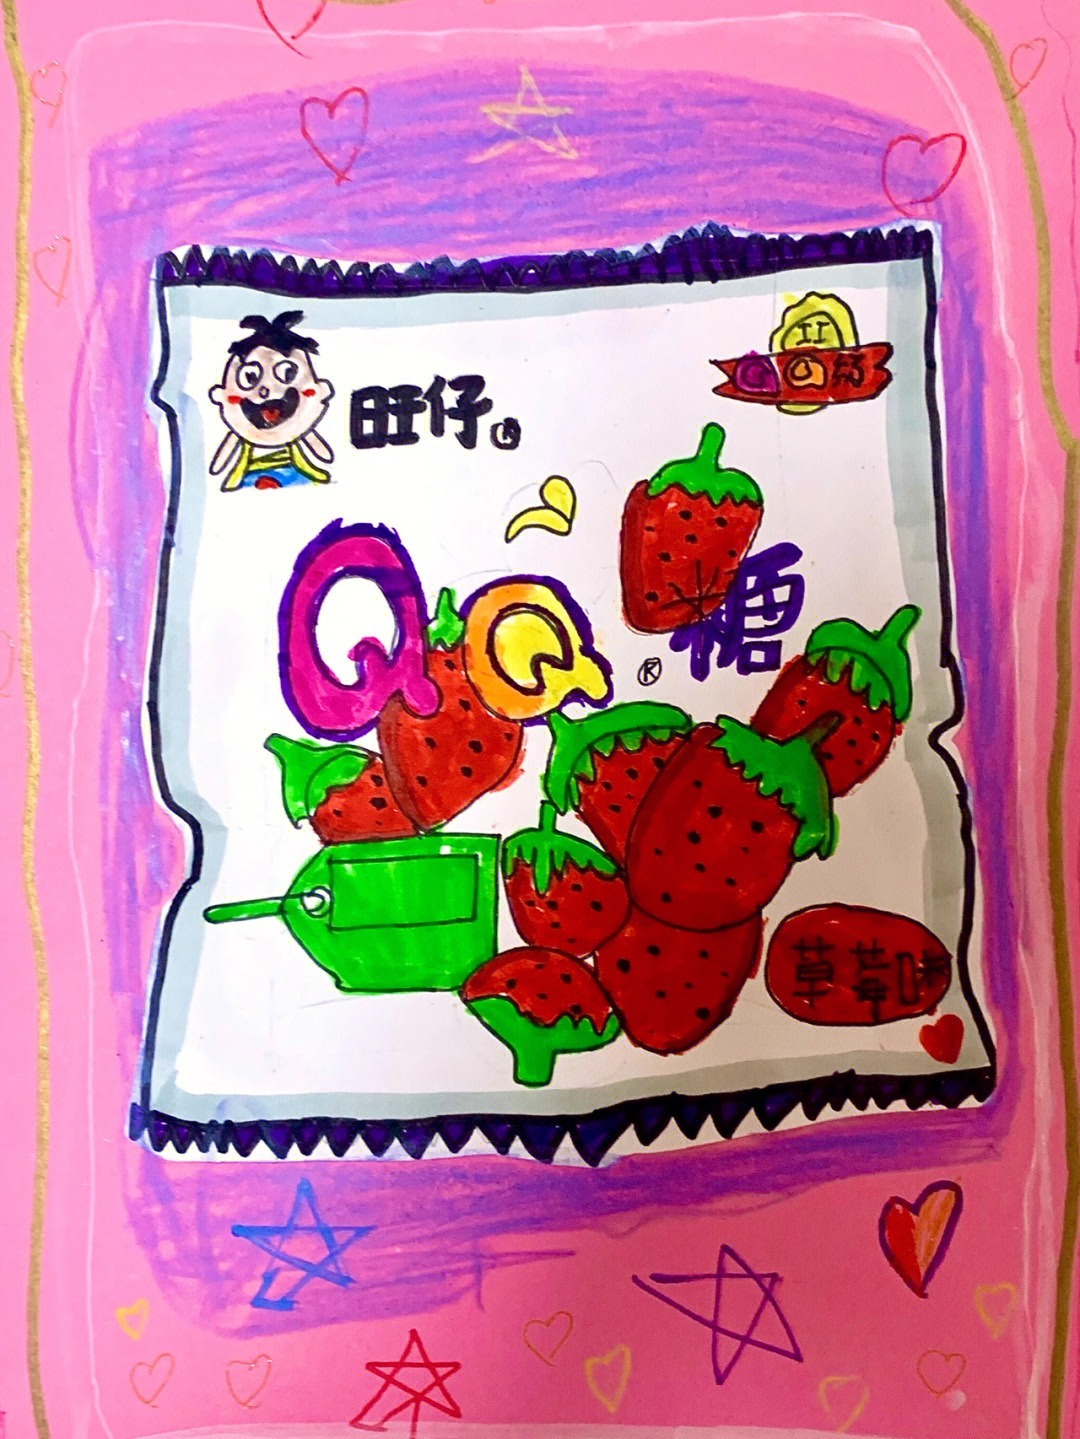 qq糖包装袋简笔画图片